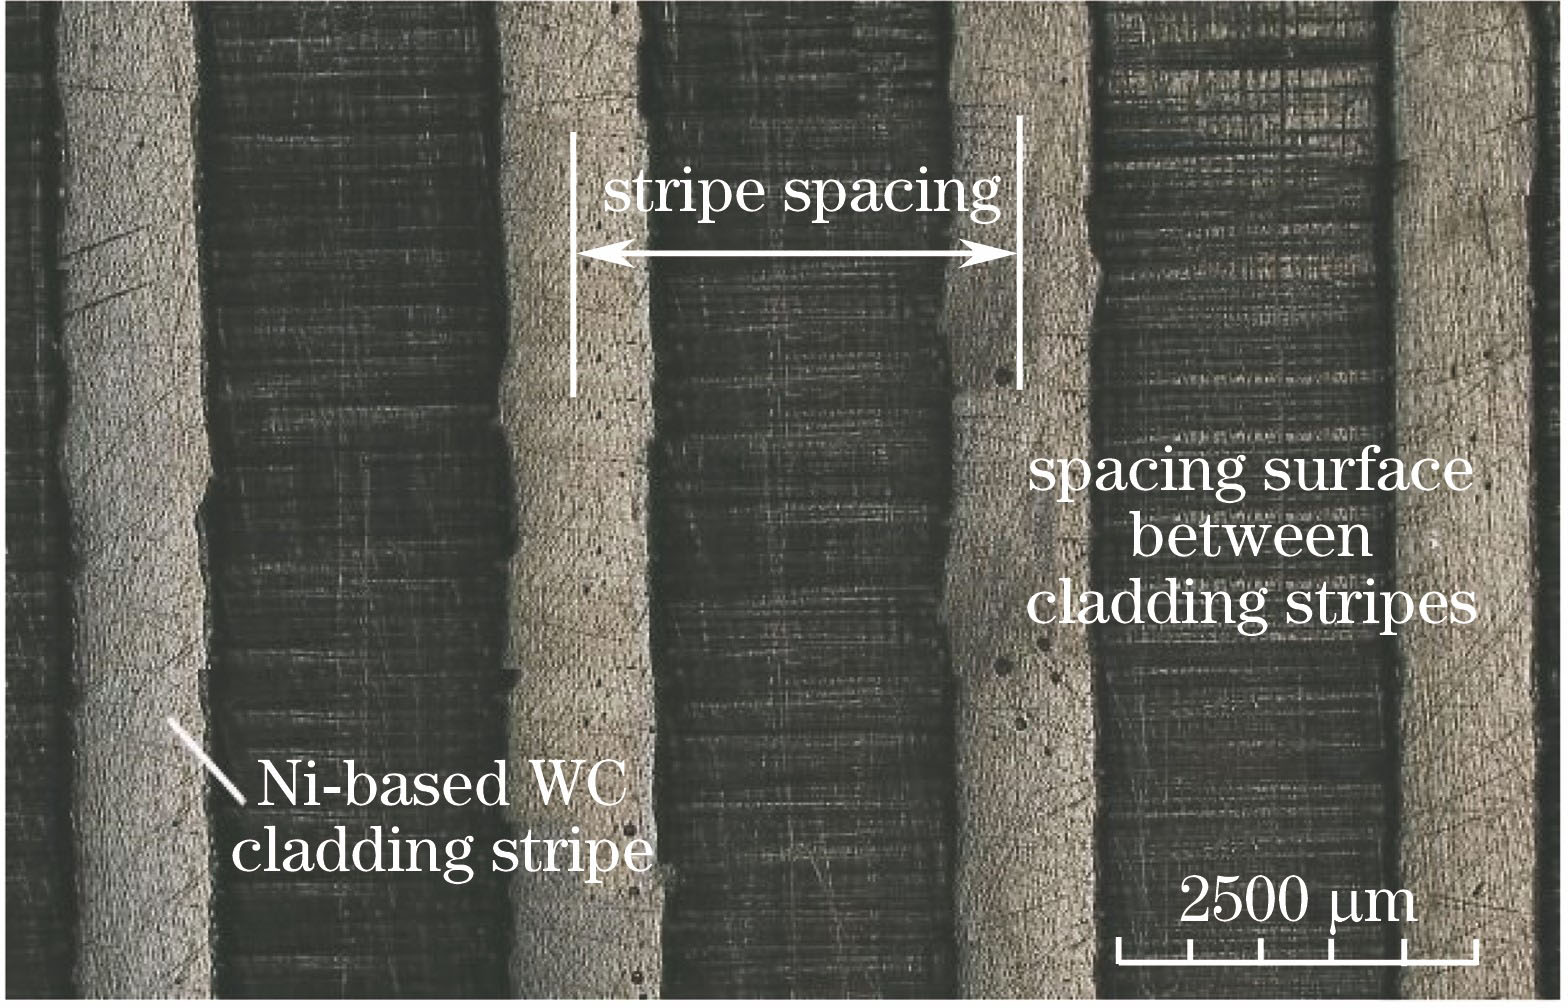 Specimen with Ni-based WC cladding stripes